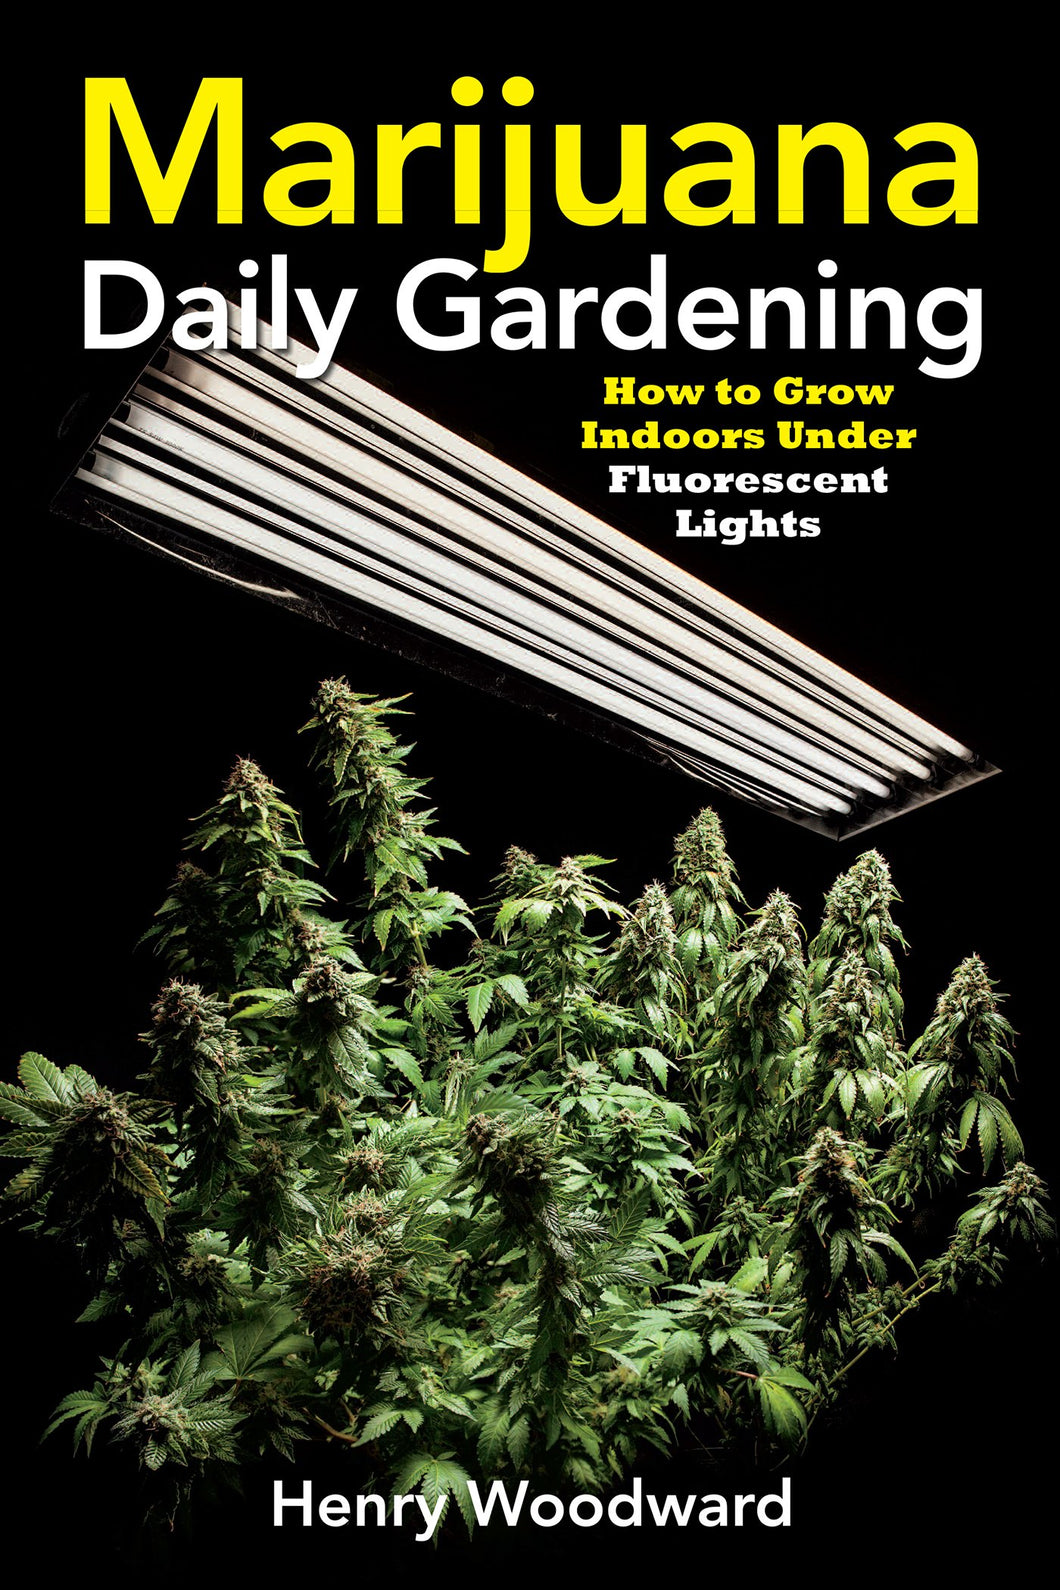 Marijuana Daily Gardening by Henry Woodward